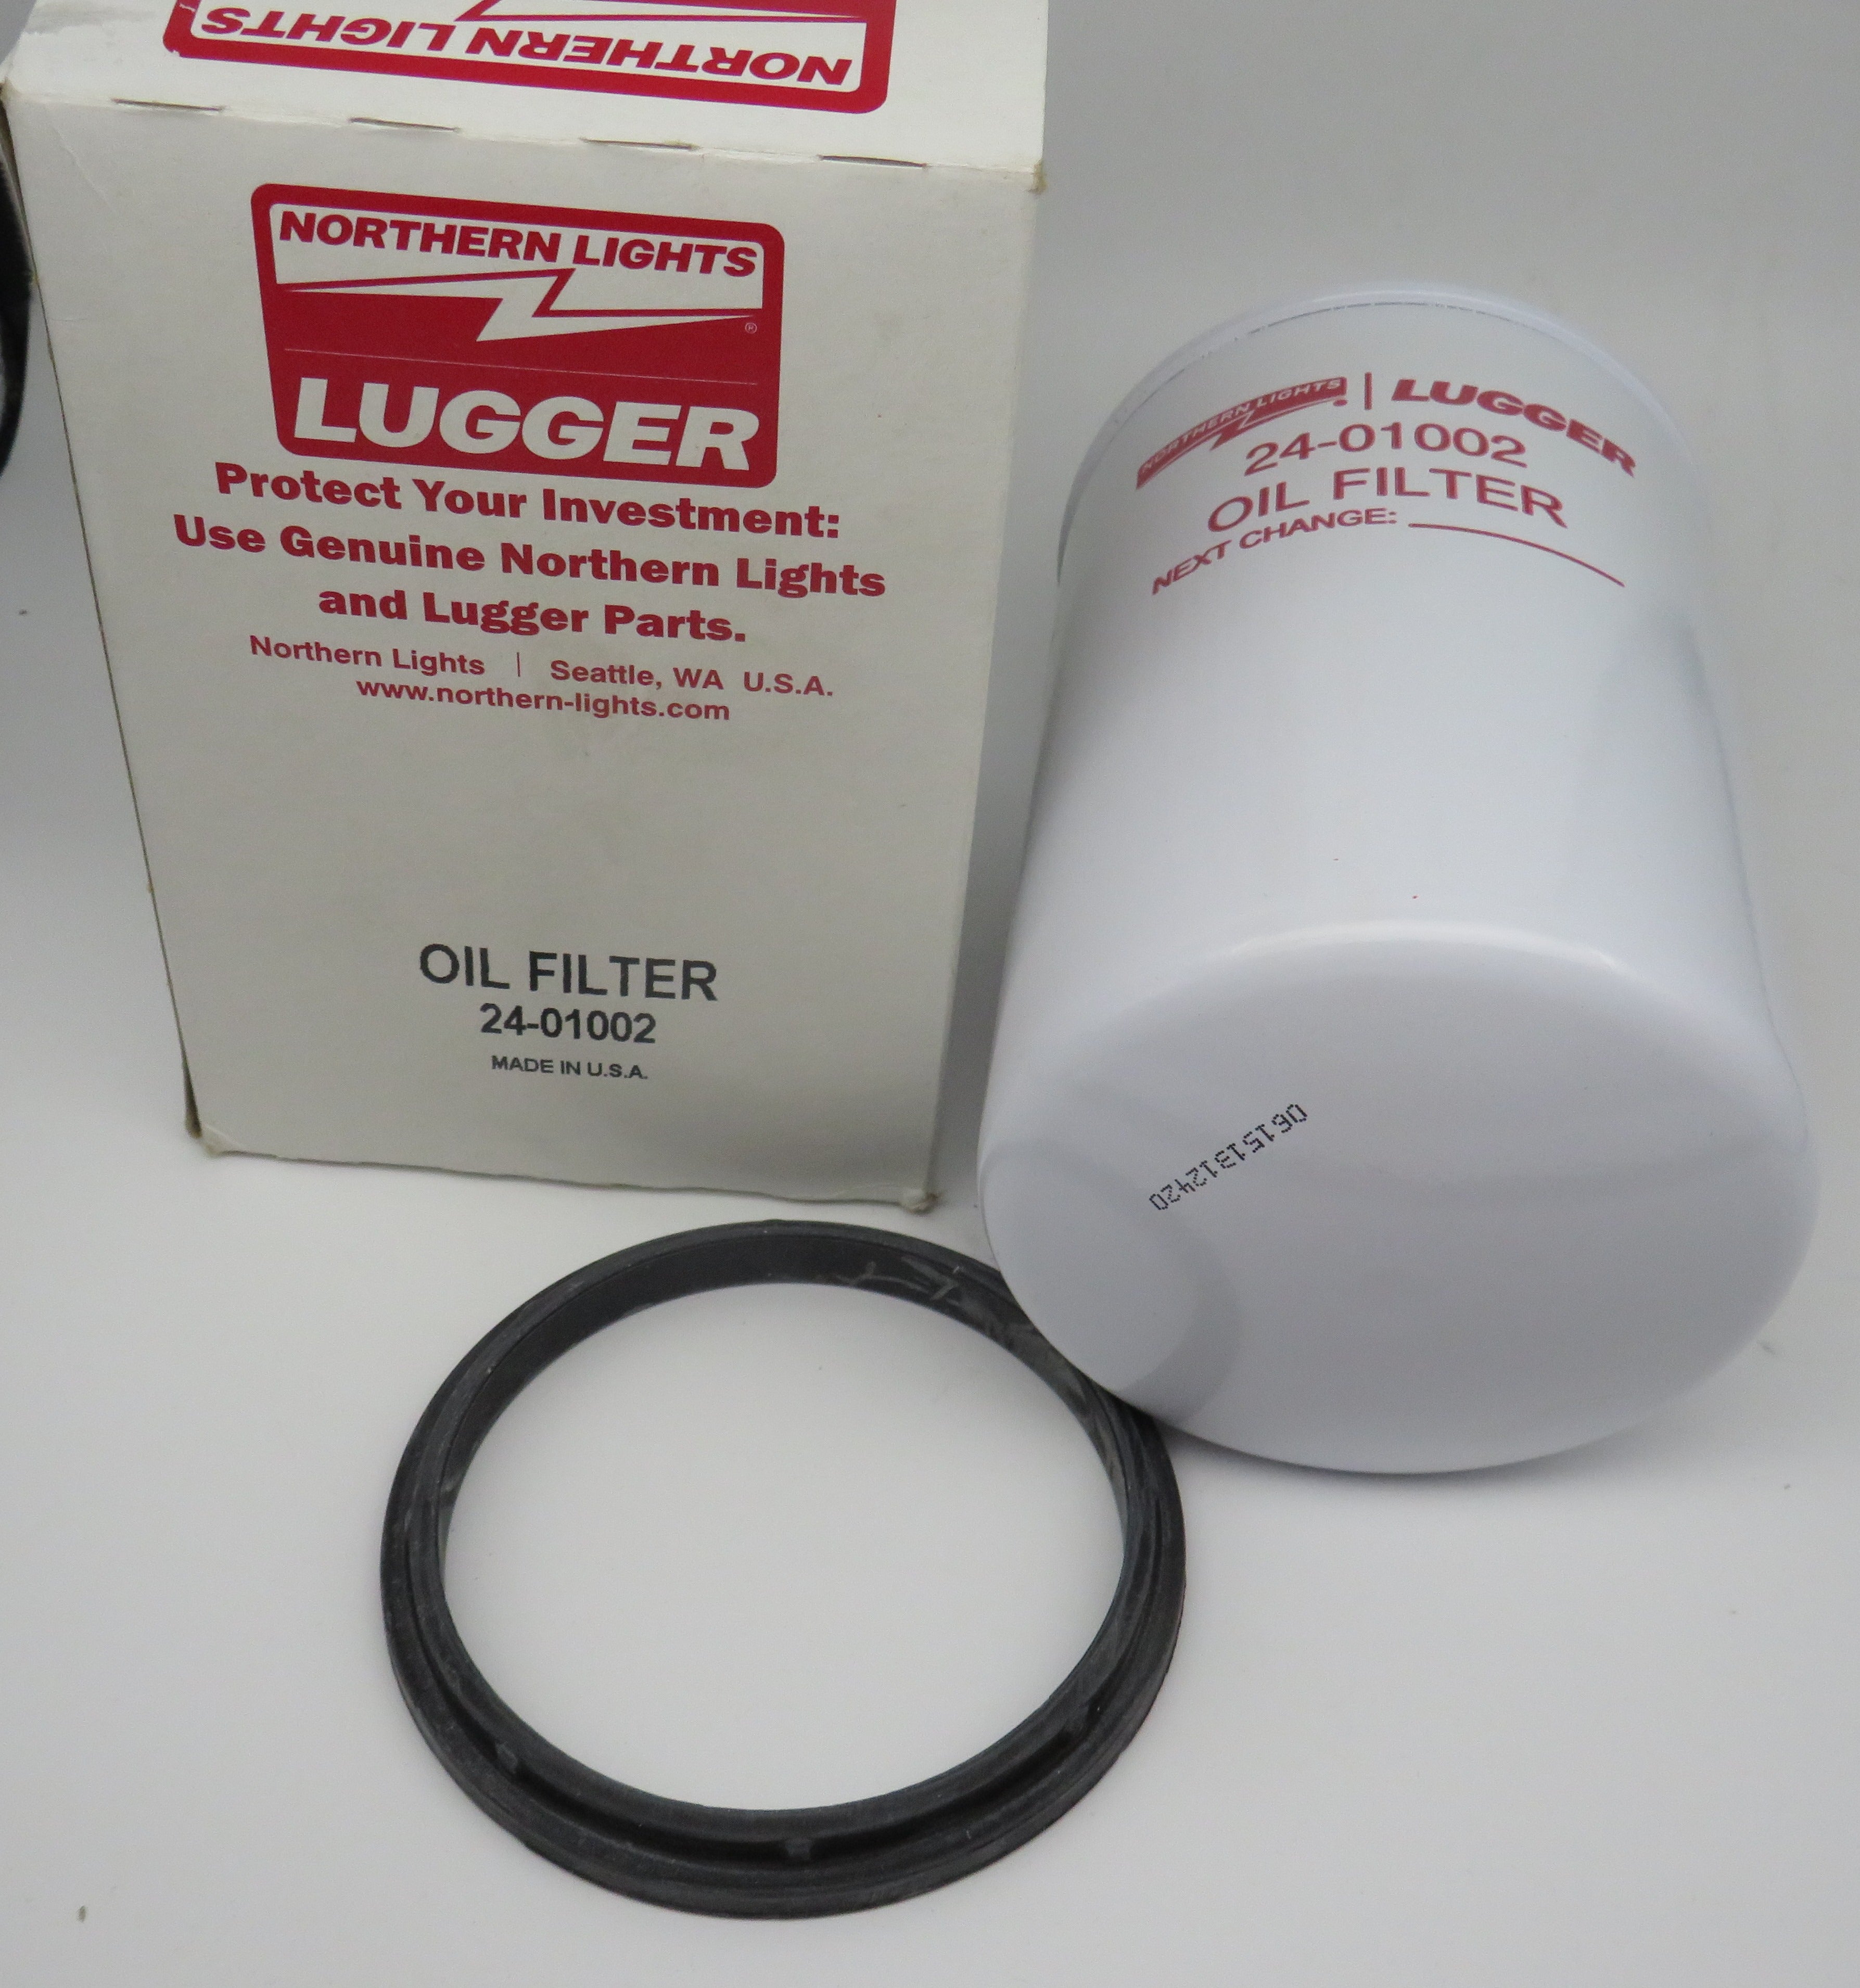 24-01002  Northern Lights Lugger Oil Filter